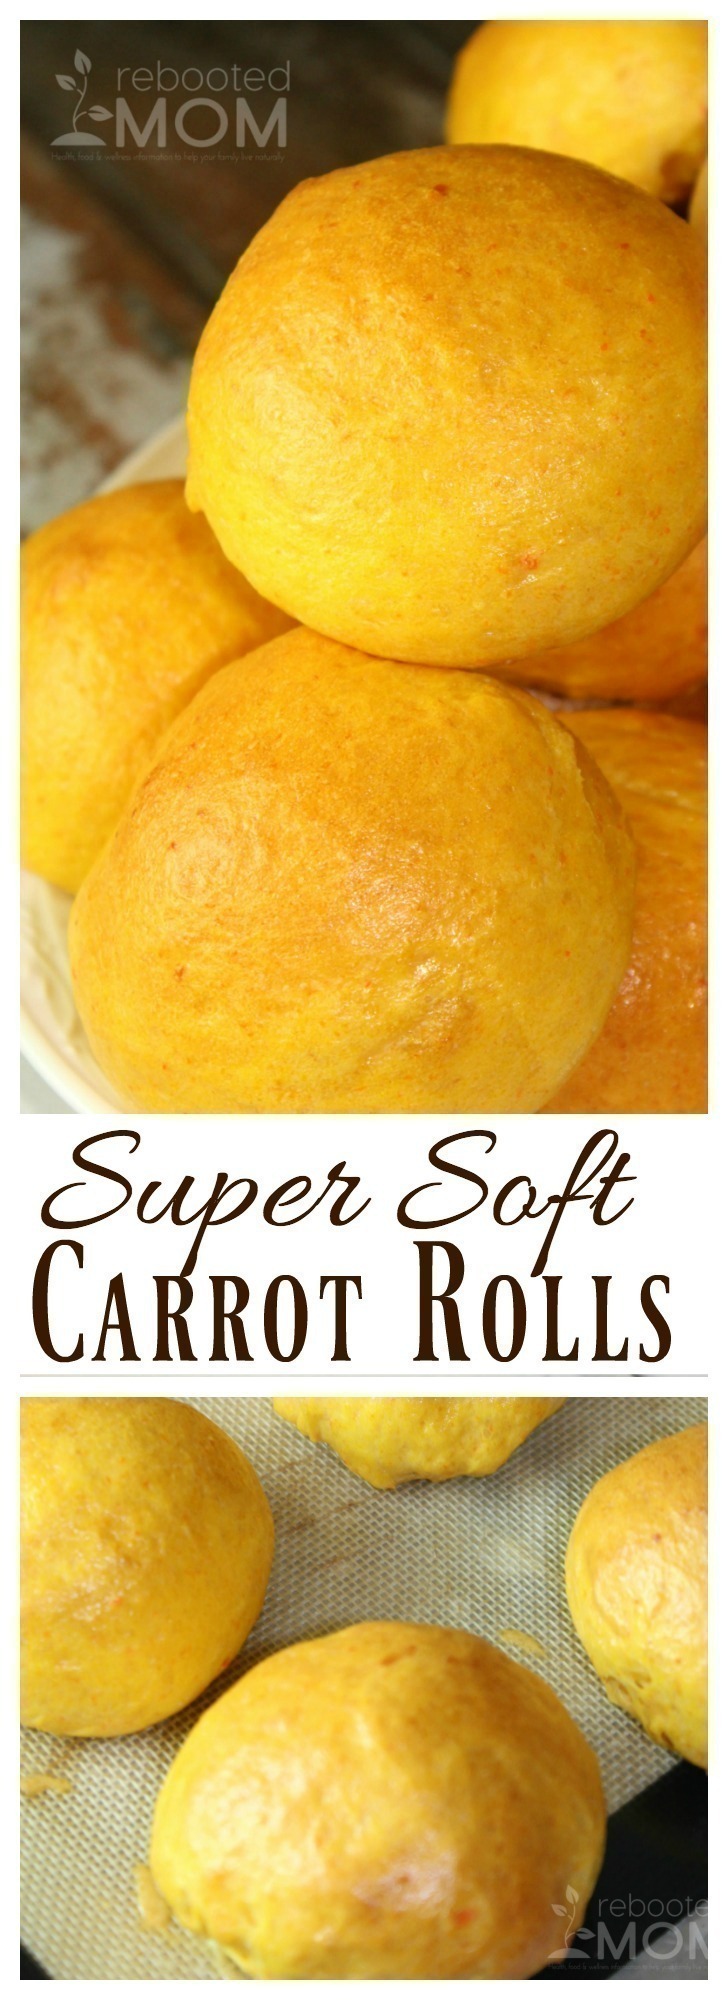 Super Soft Carrot Rolls